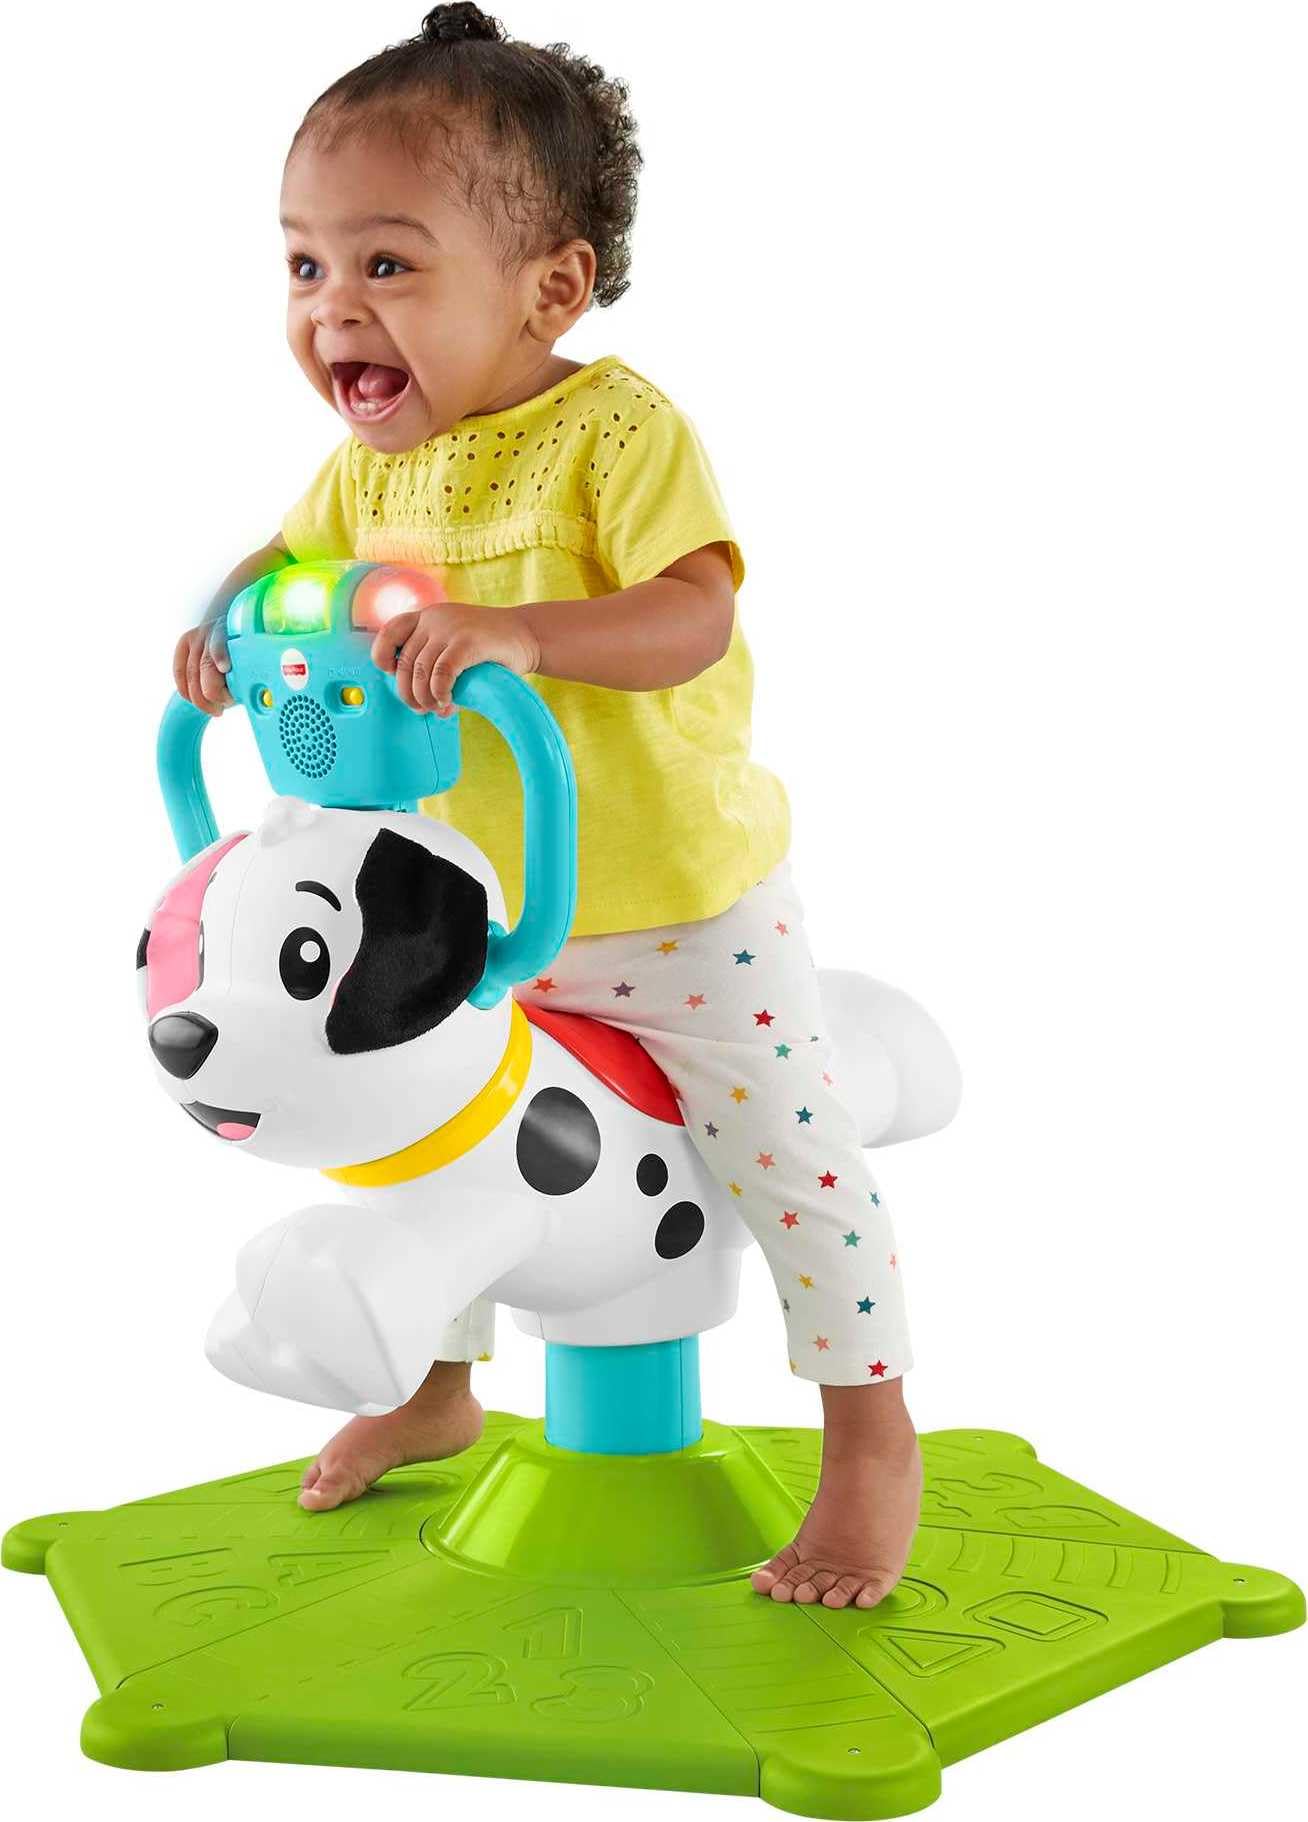 Fisher-Price 幼儿骑乘式学习玩具、弹跳和旋转小狗固定音乐摇椅，适合 12 个月以上婴儿和幼儿...